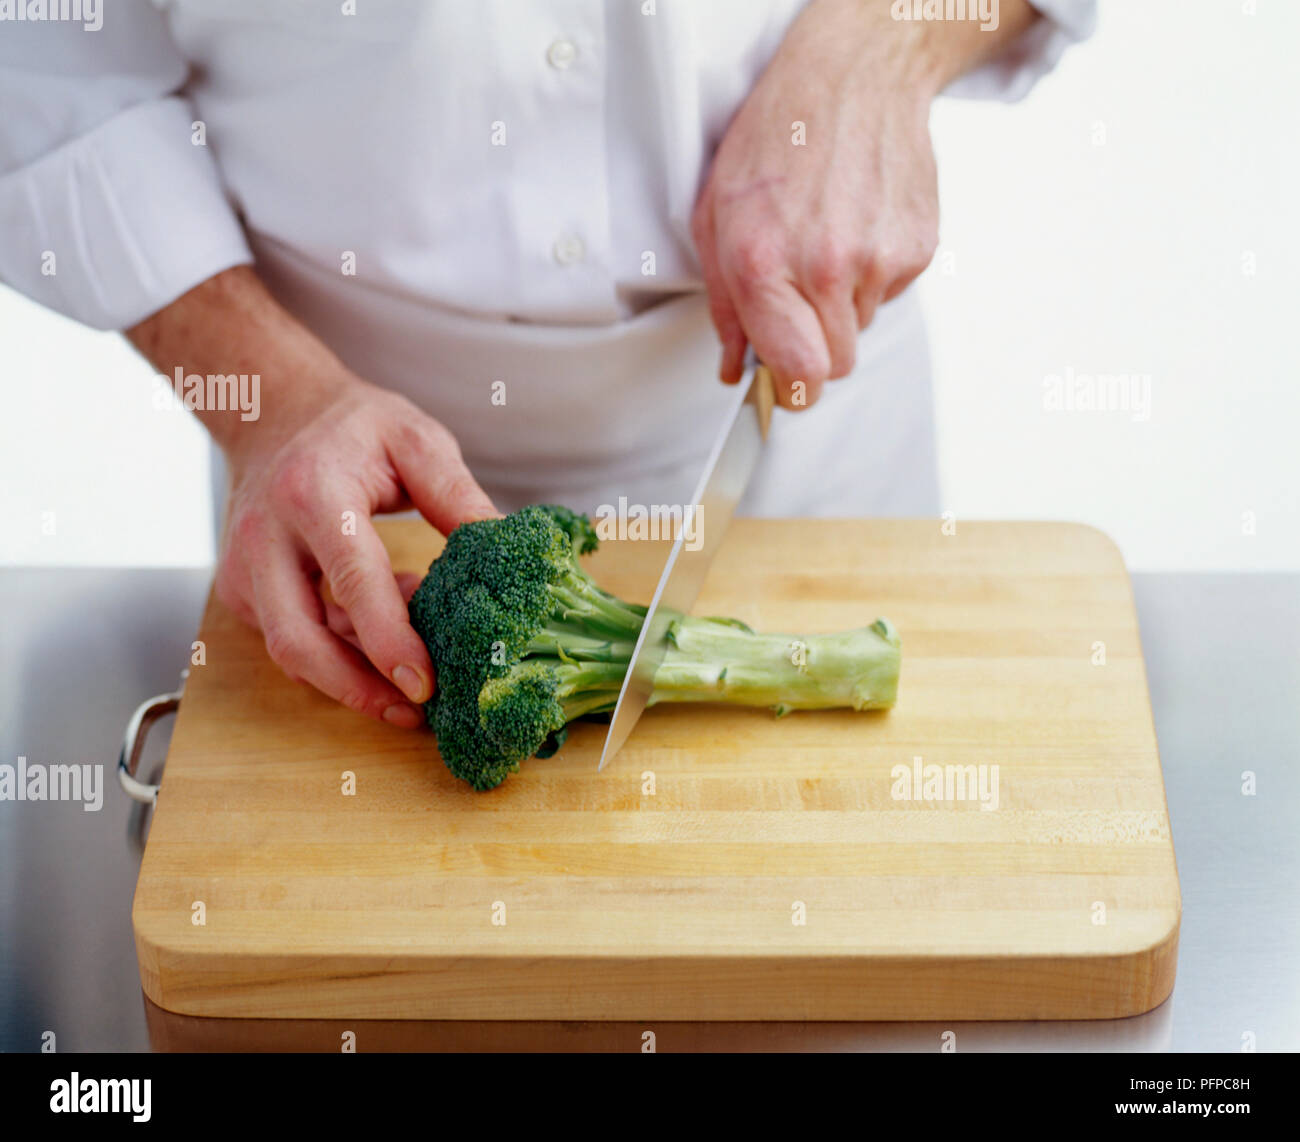 Using Kitchen Knife To Cut Stem From Broccoli Stock Photo Alamy